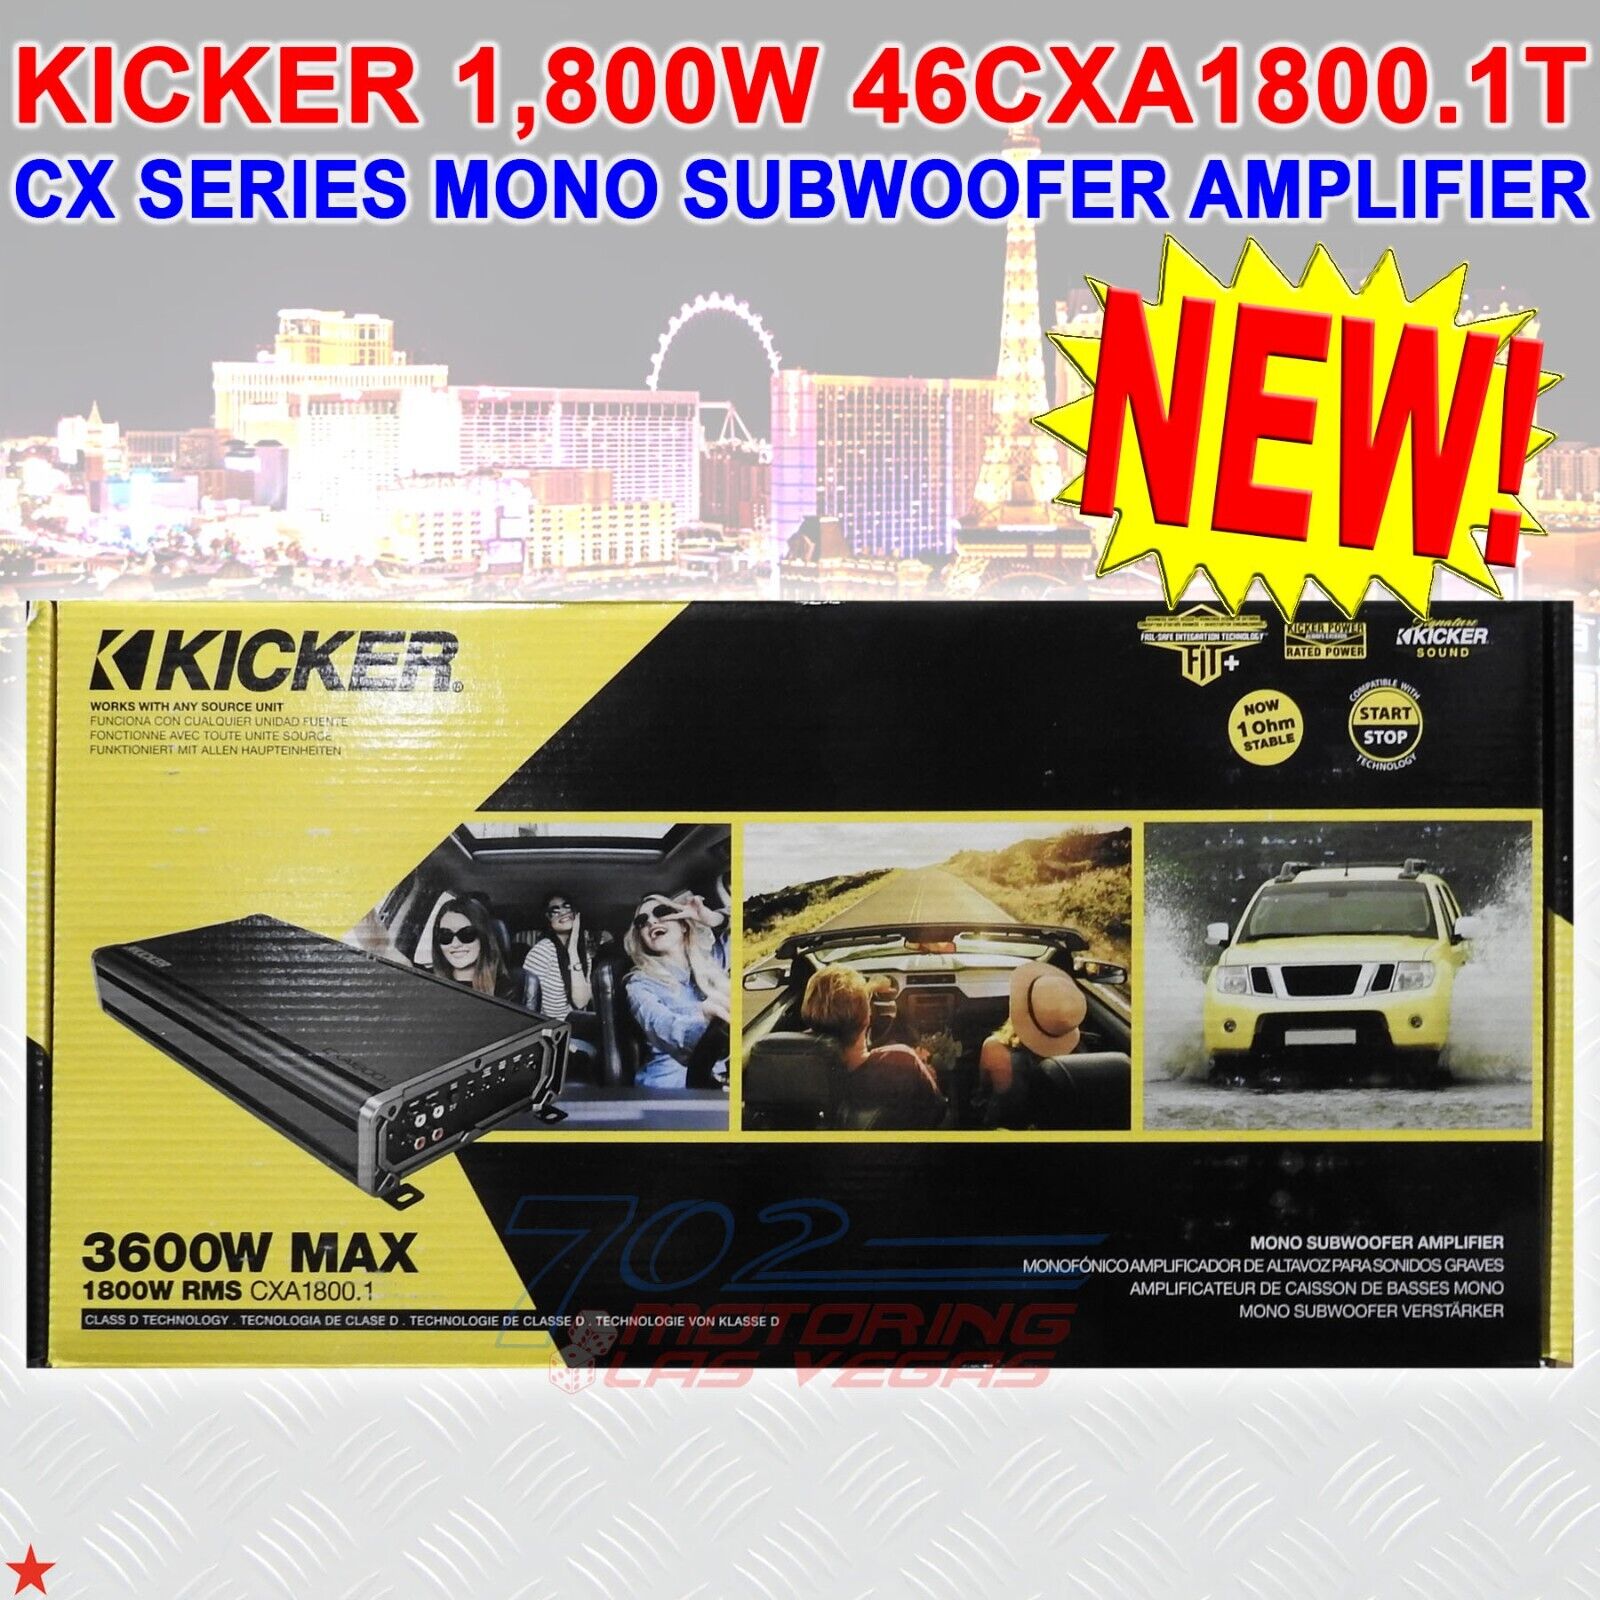 KICKER 46CXA18001, CX SERIES MONO CLASS D CAR AMPLIFIER, 1800W (CXA18001T) NEW